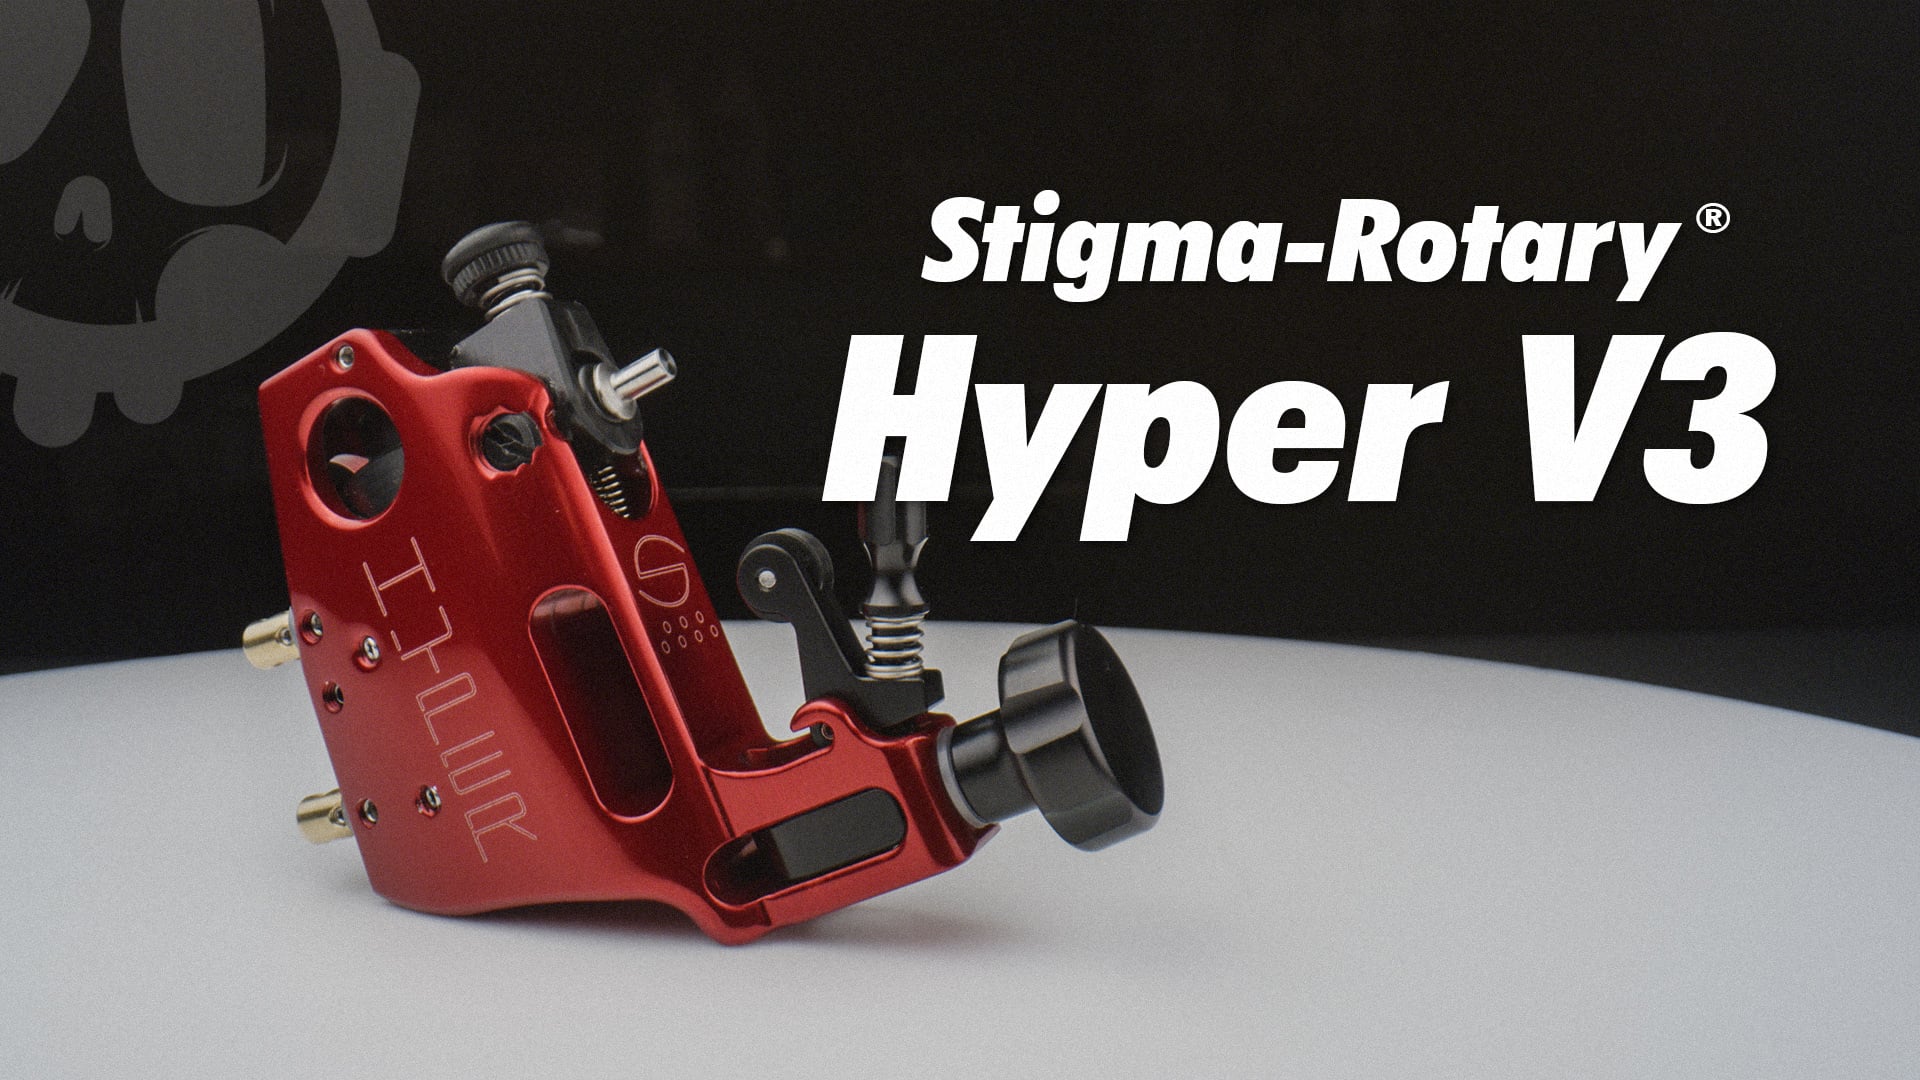 Stigma-Rotary® Hyper V3 Tattoo Machine | Review, Setup & Unboxing